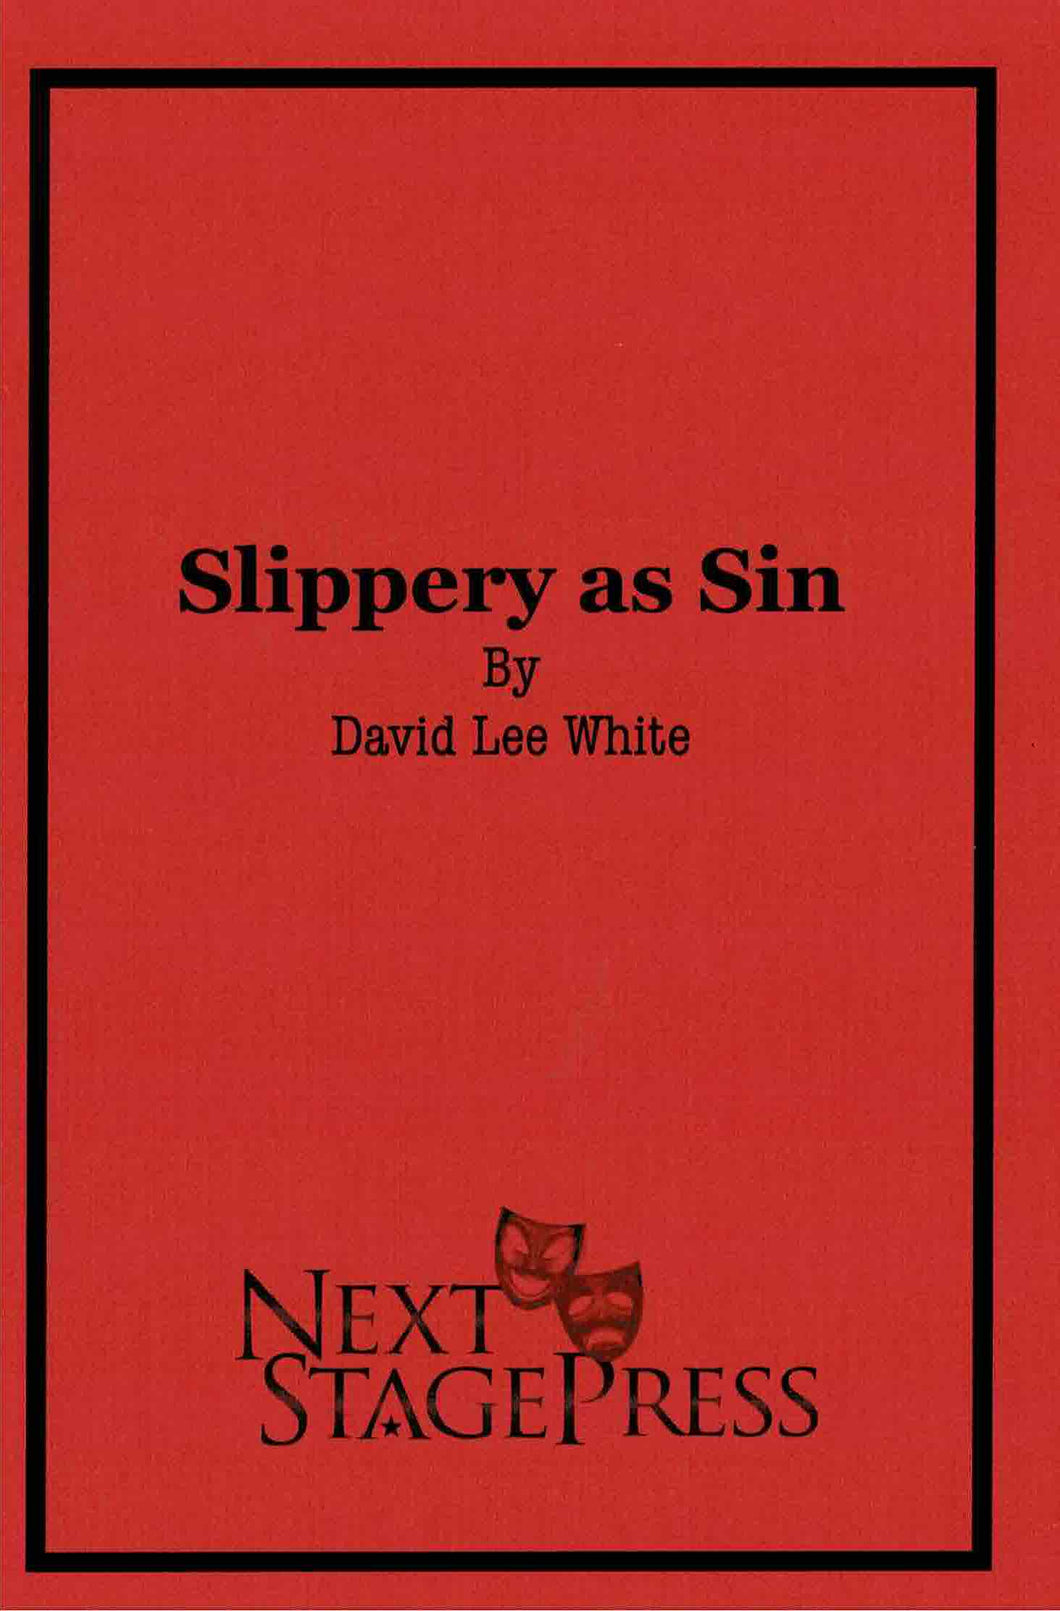 Slippery as Sin by David Lee White - Digital Version